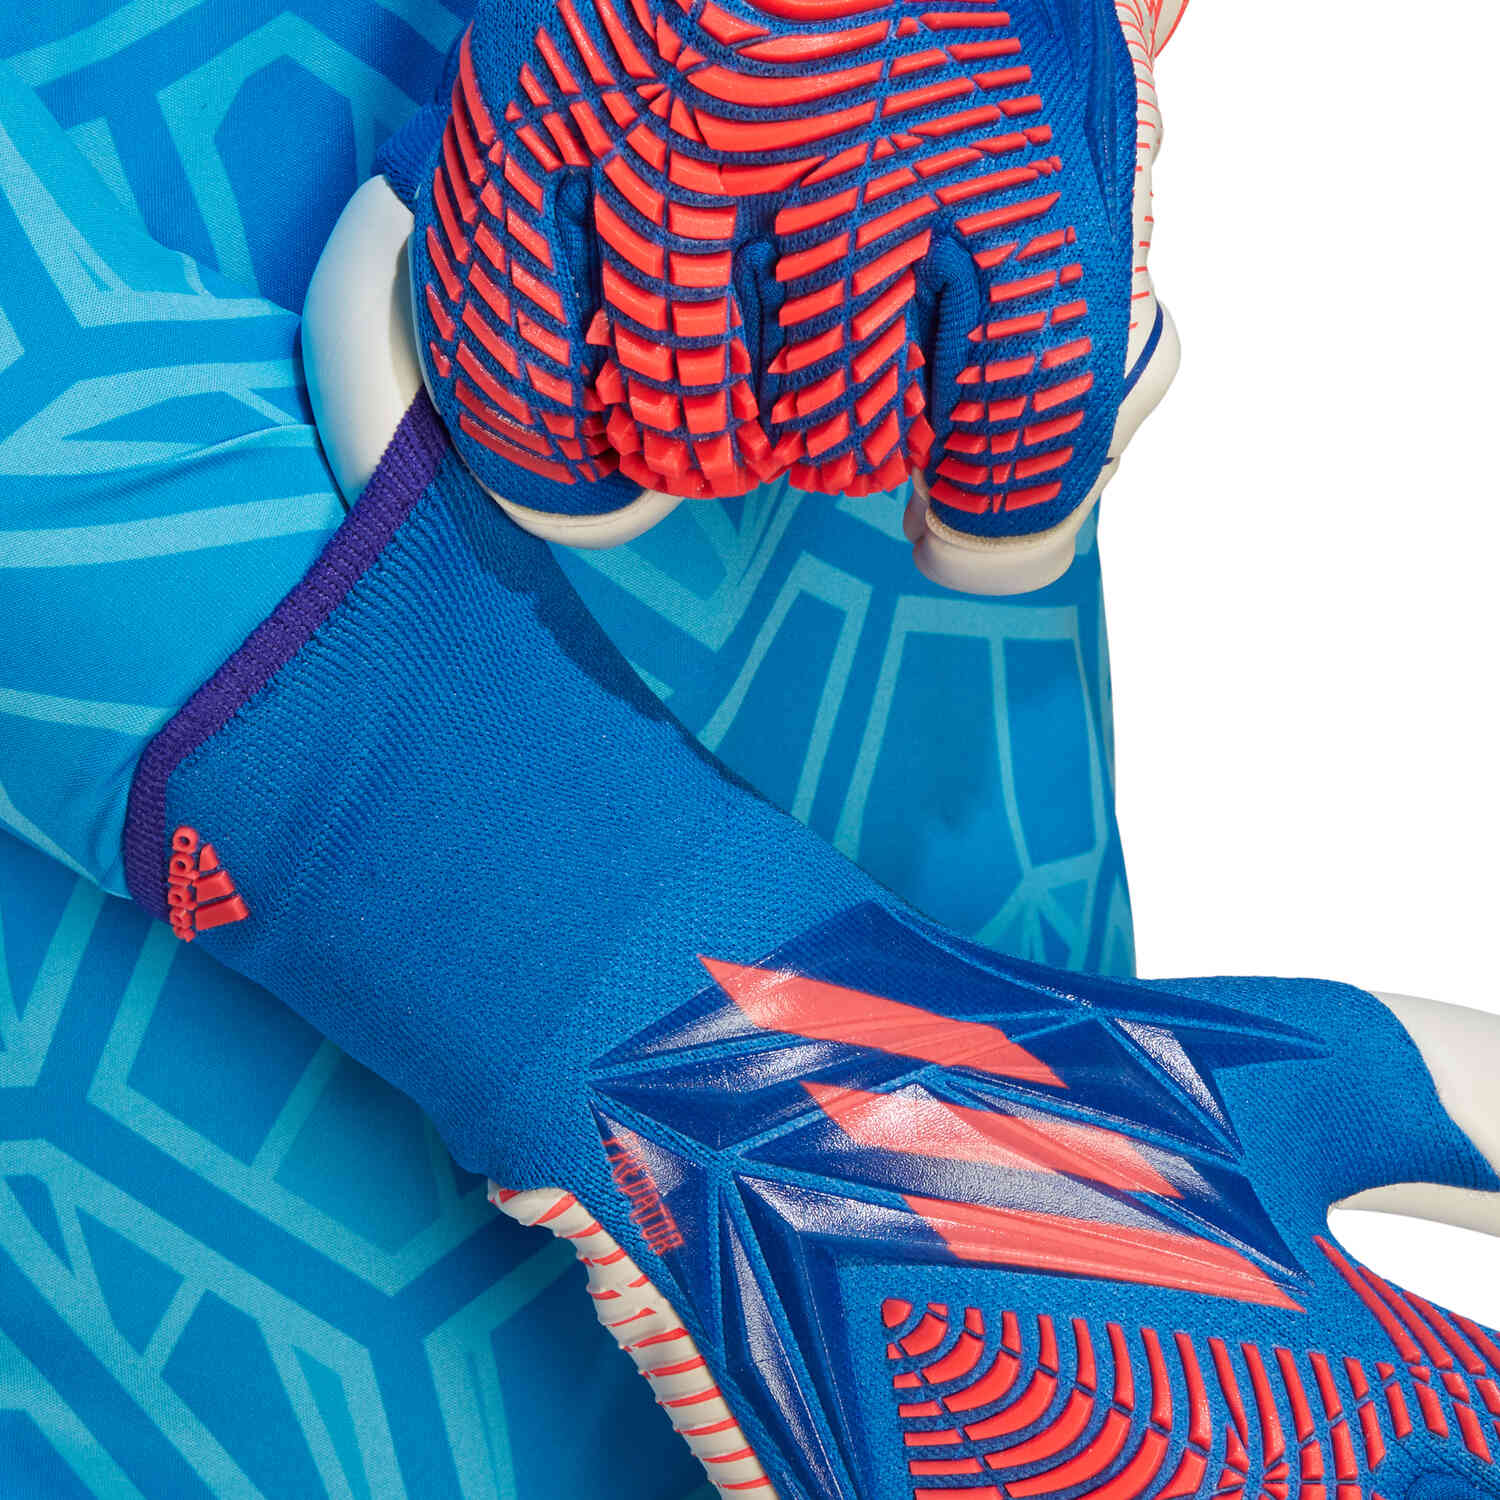 adidas Predator League GK Gloves - Hi-Res Blue/Turbo/White